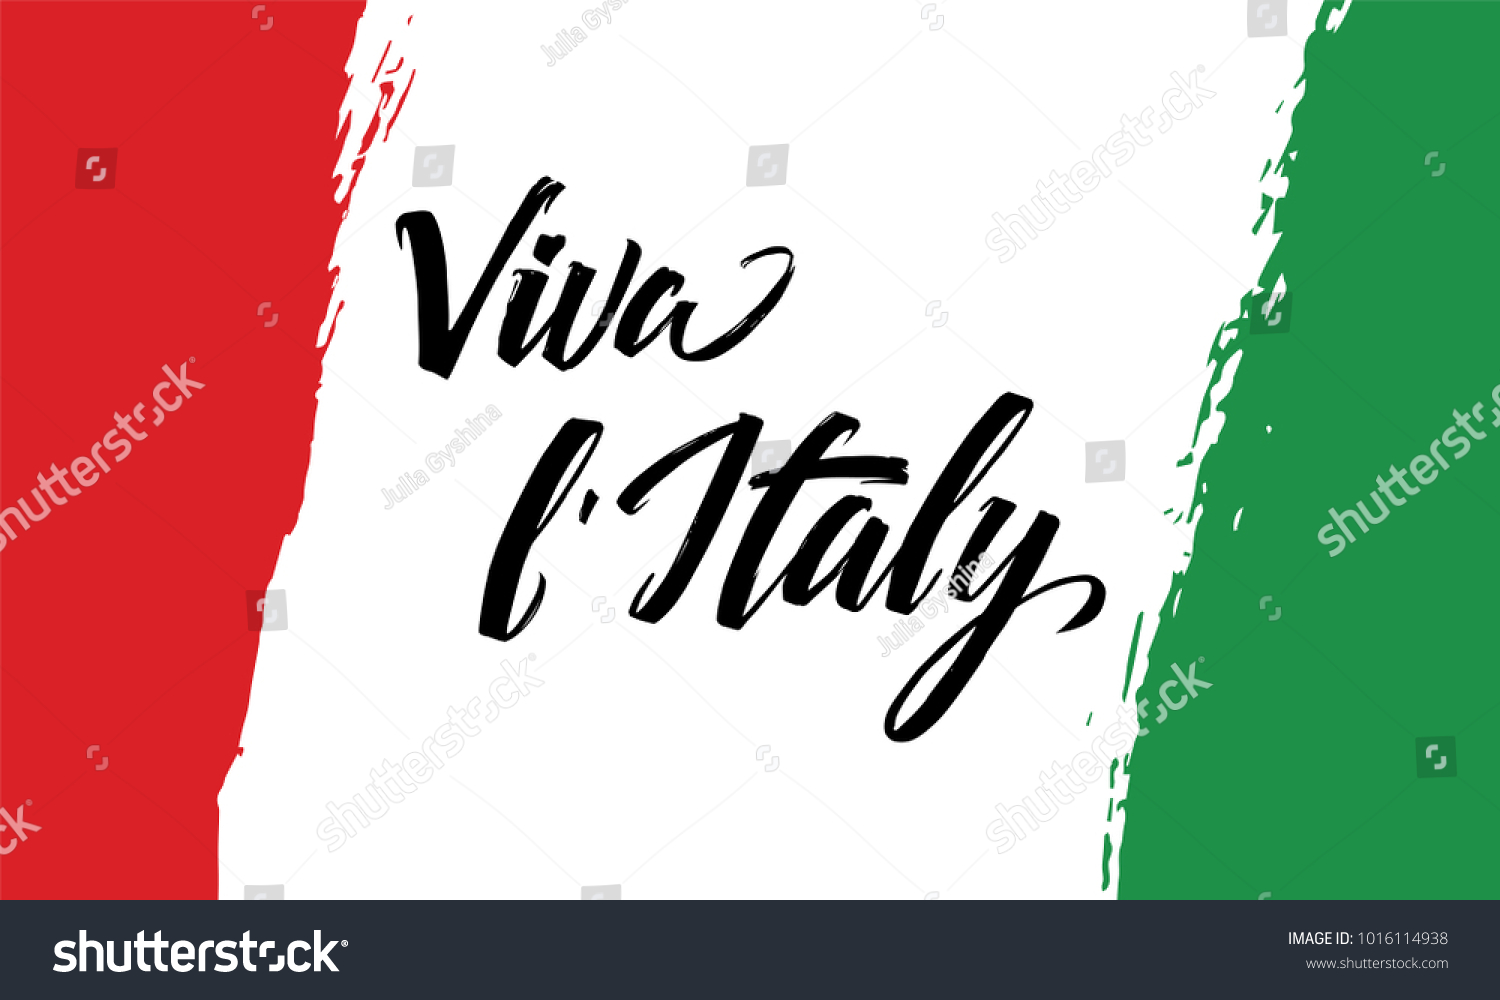 40 Viva italia calligraphy Images, Stock Photos & Vectors | Shutterstock